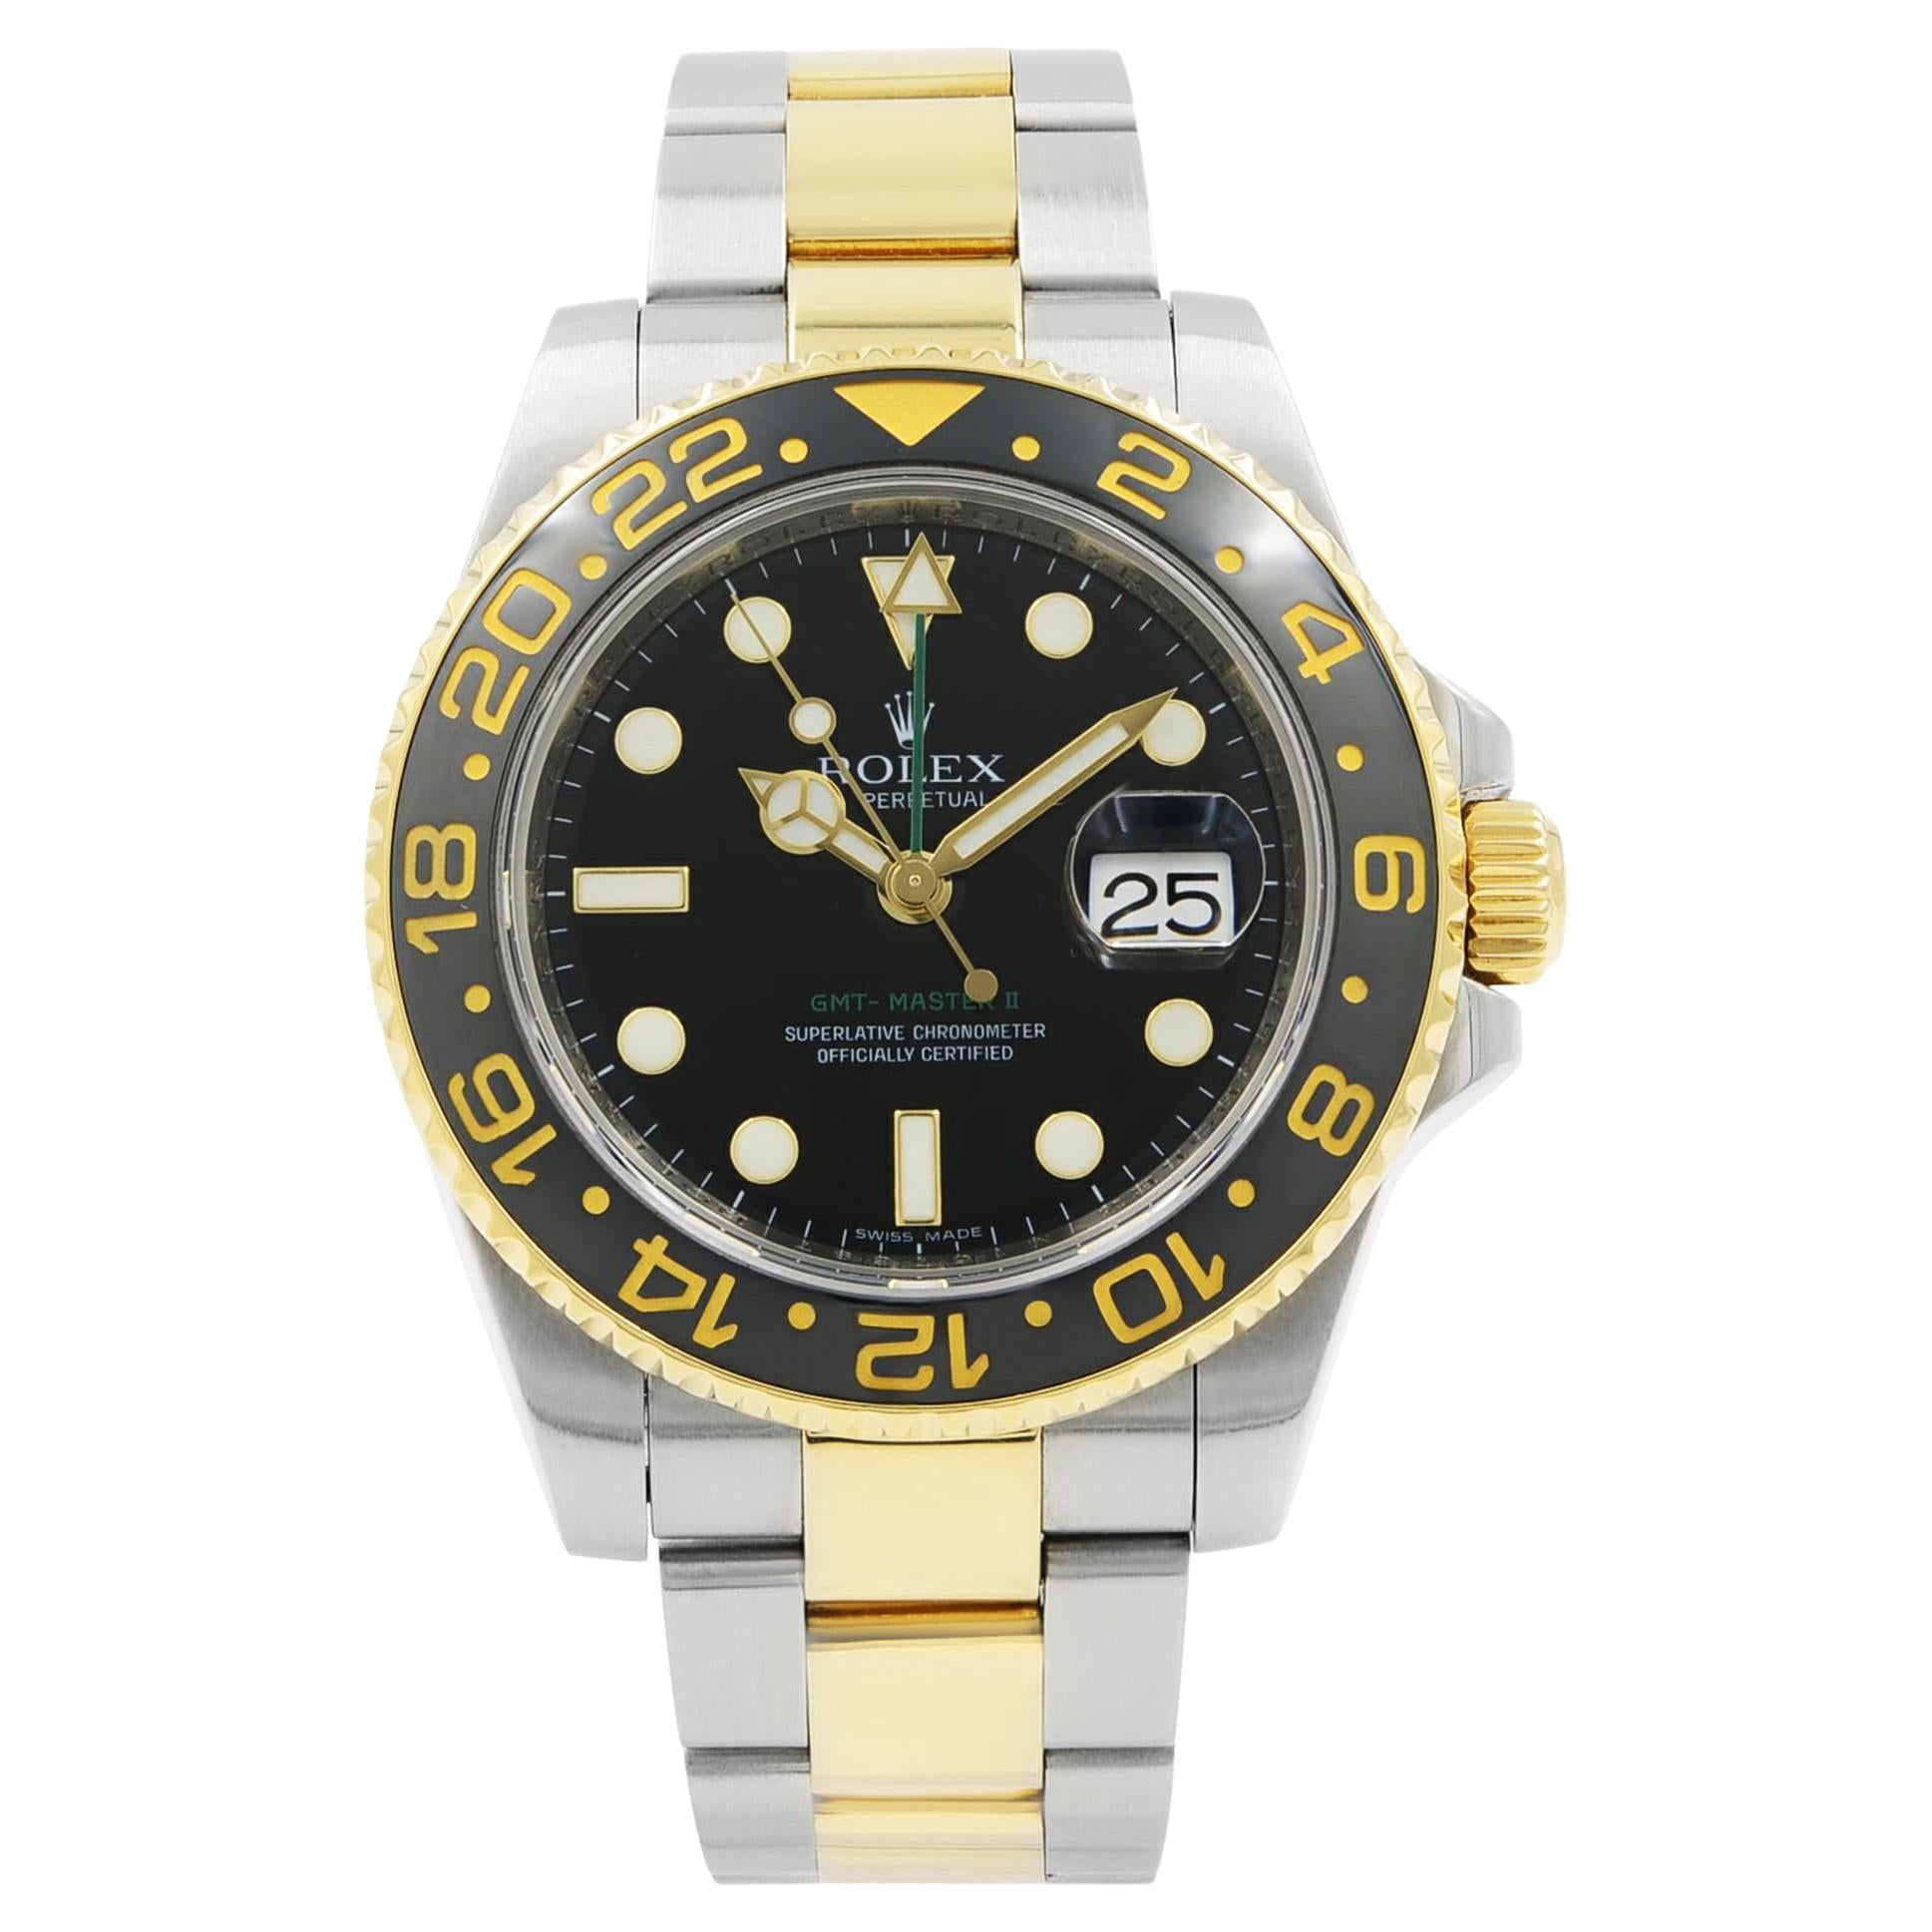 Rolex GMT-Master II Steel Gold Black Dial Ceramic Bezel Mens Watch 116713LN